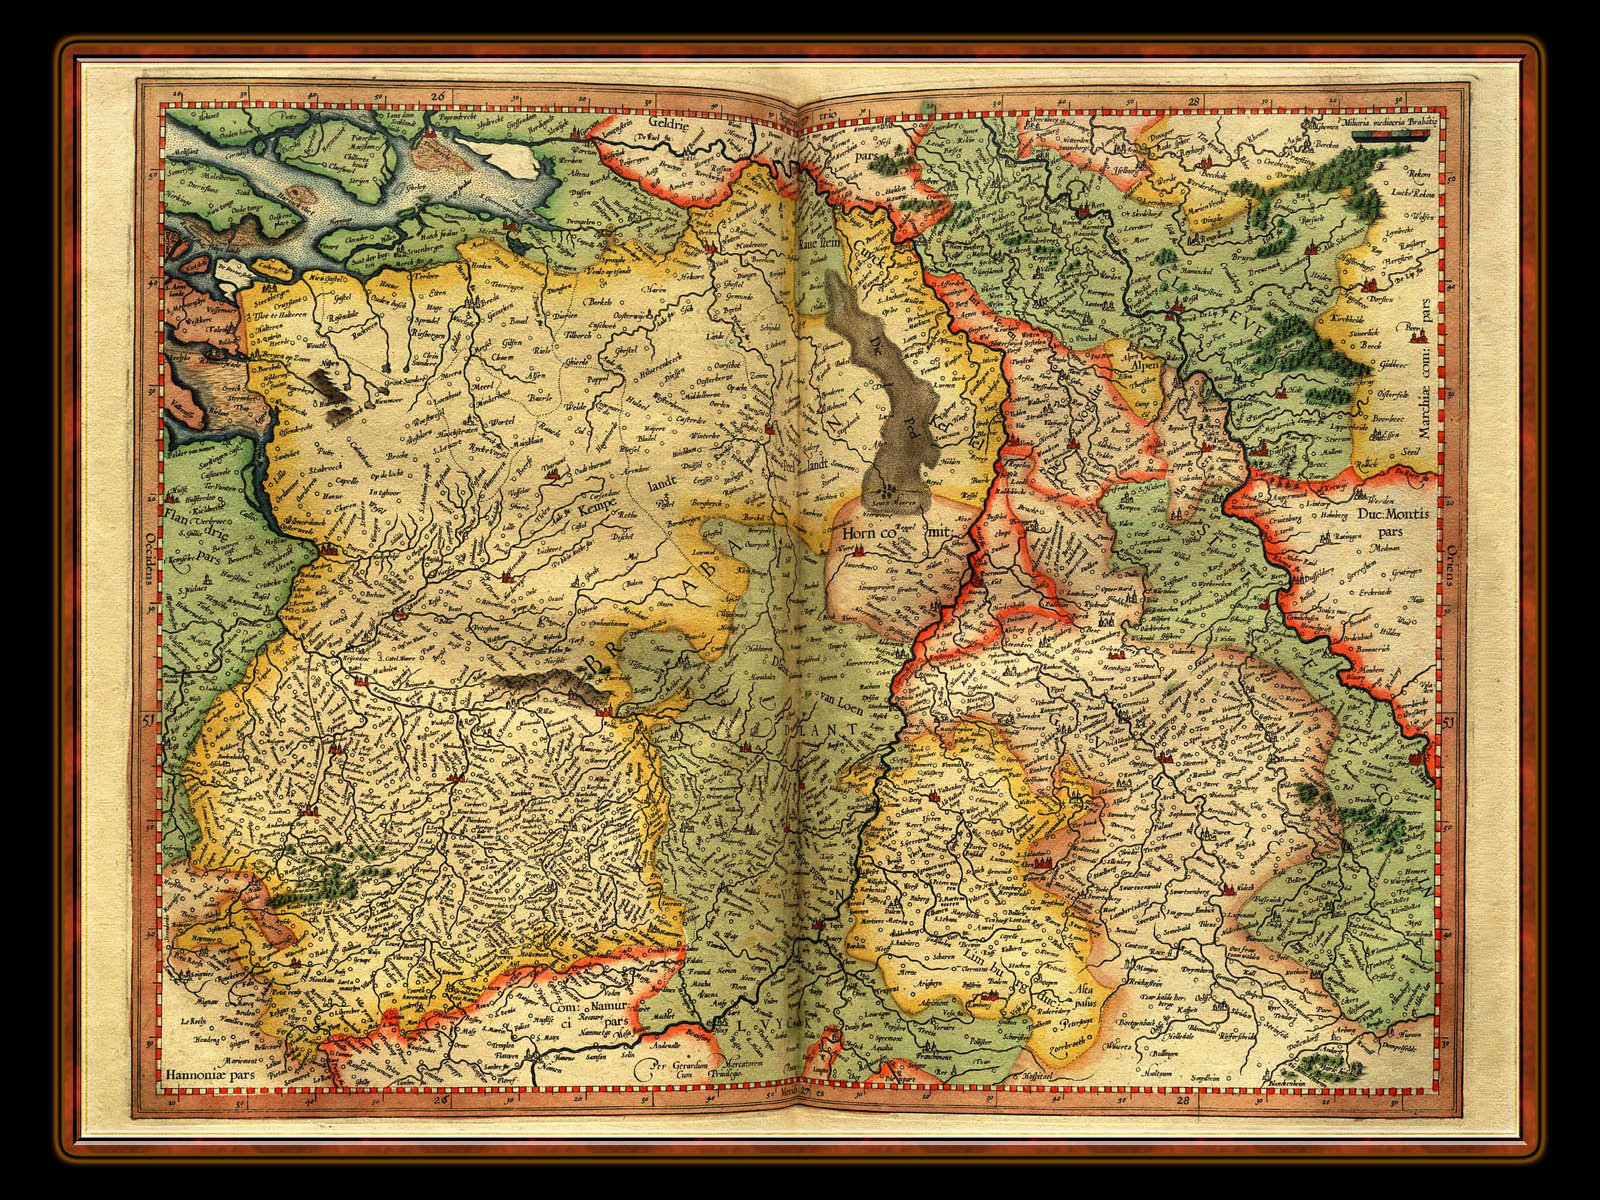 "Gerhard Mercator 1595 World Atlas - Cosmographicae" - Wallpaper No. 55 of 106. Right click for saving options.